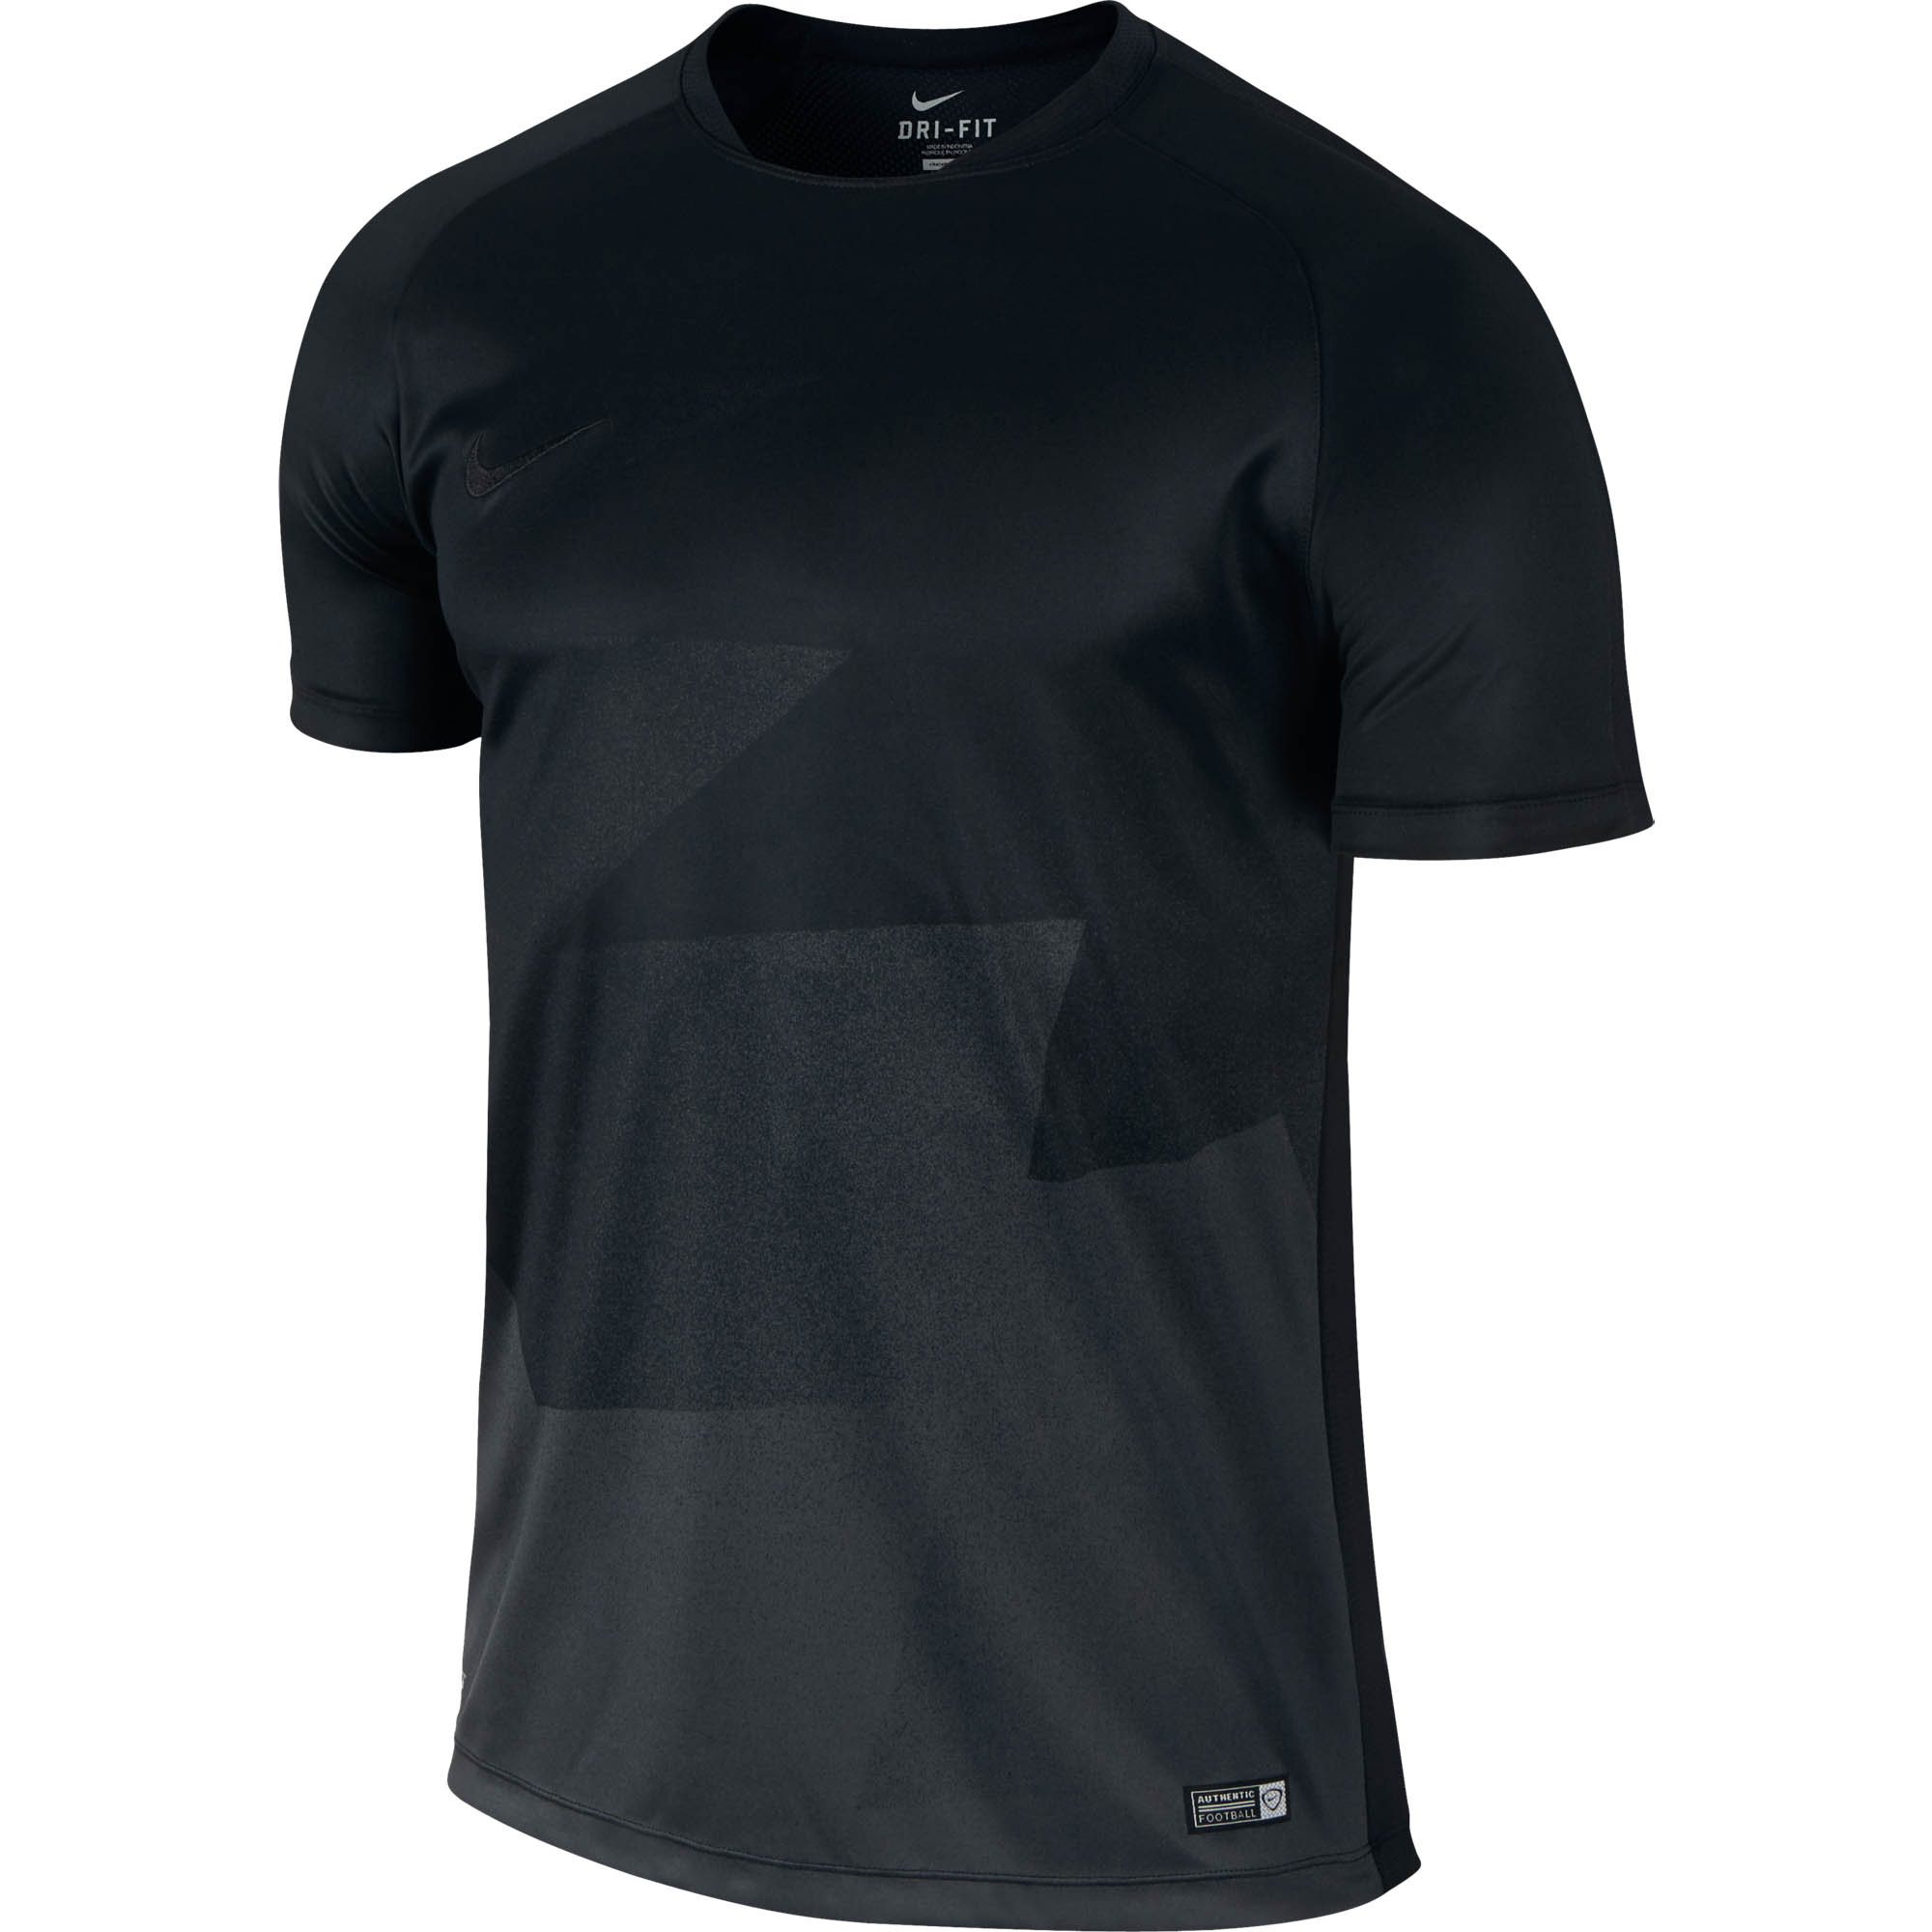 Nike GPX Training Top - Nike Soccer Training Shirts